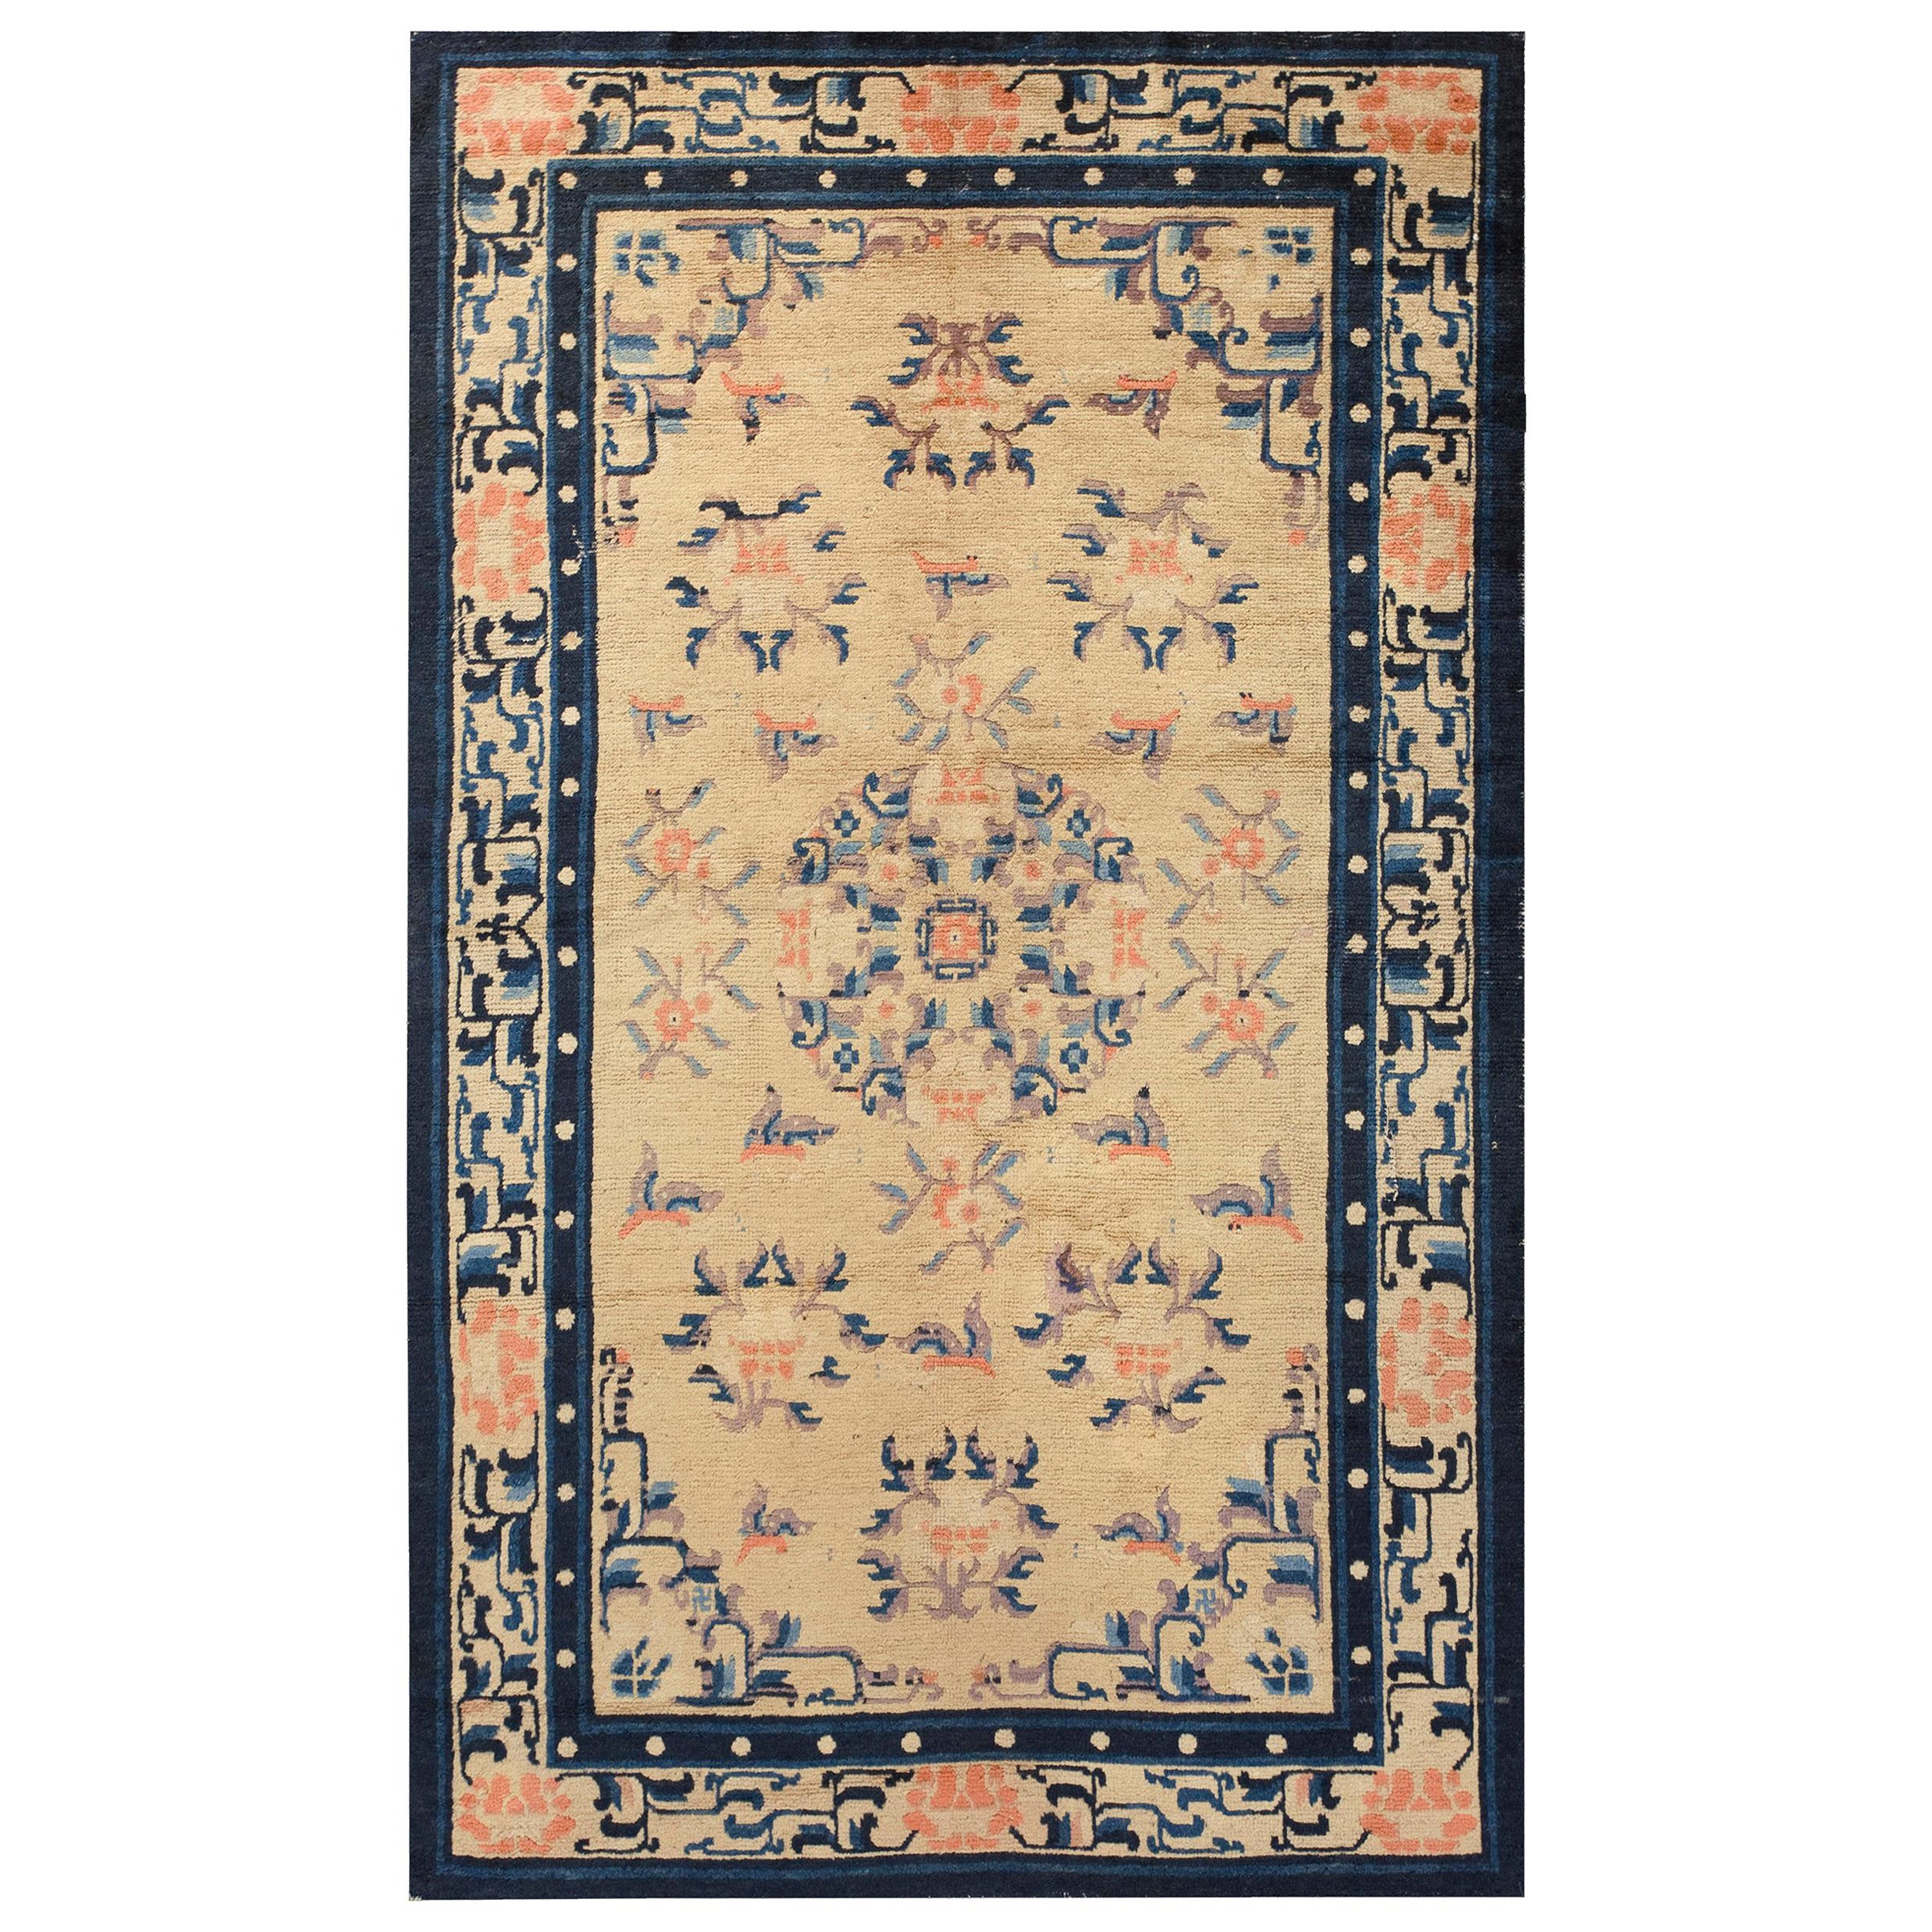 Late 19th Century Chinese Ningxia Carpet ( 4'4" x 7' - 132 x 213 cm )